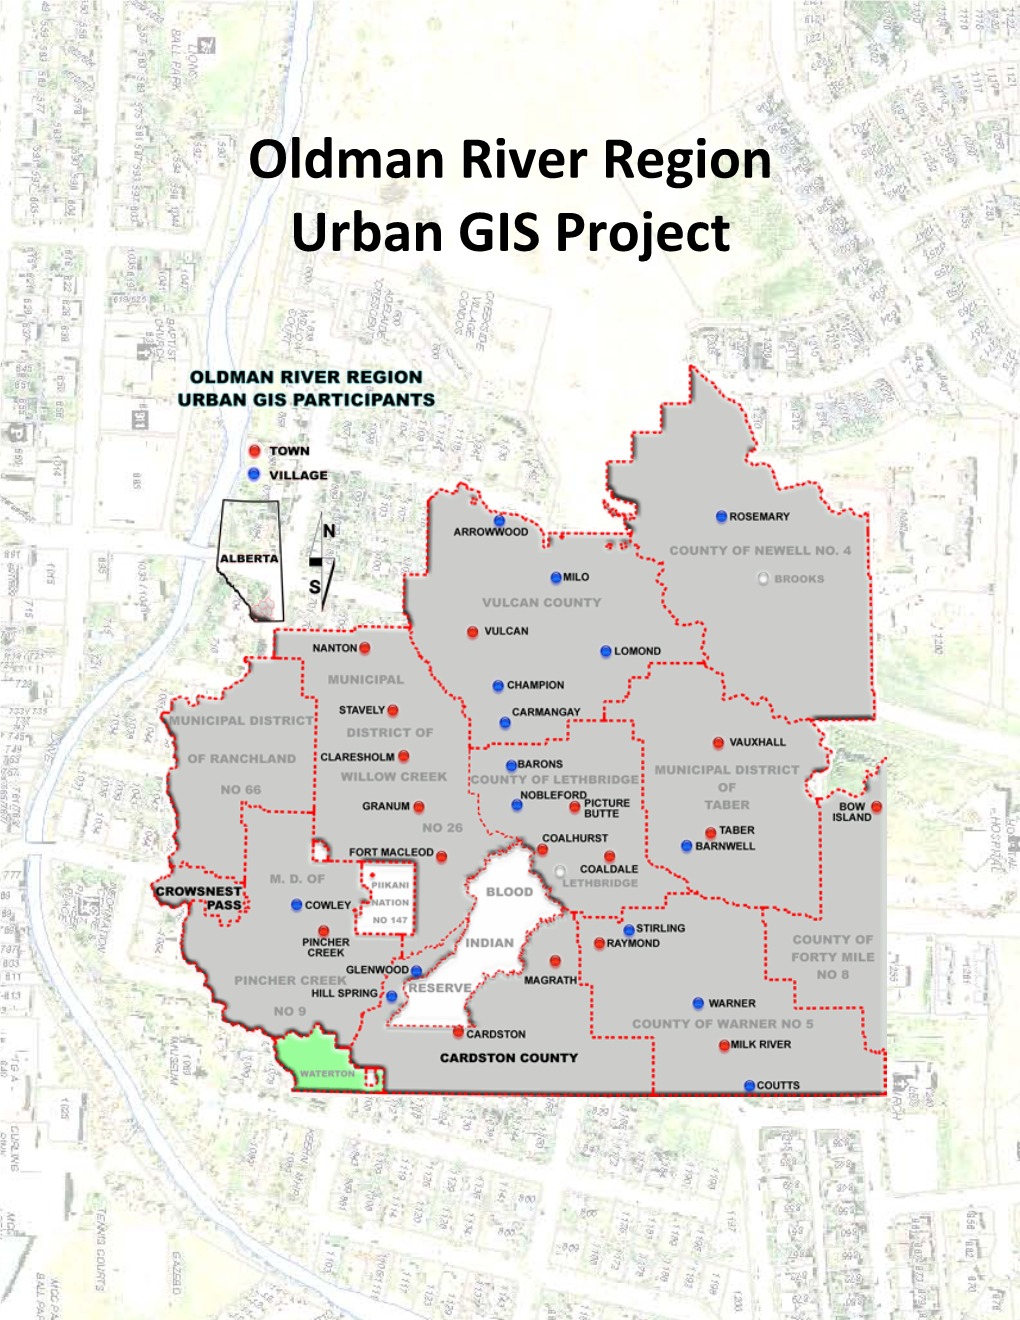 The Oldman River Region Urban GIS Project